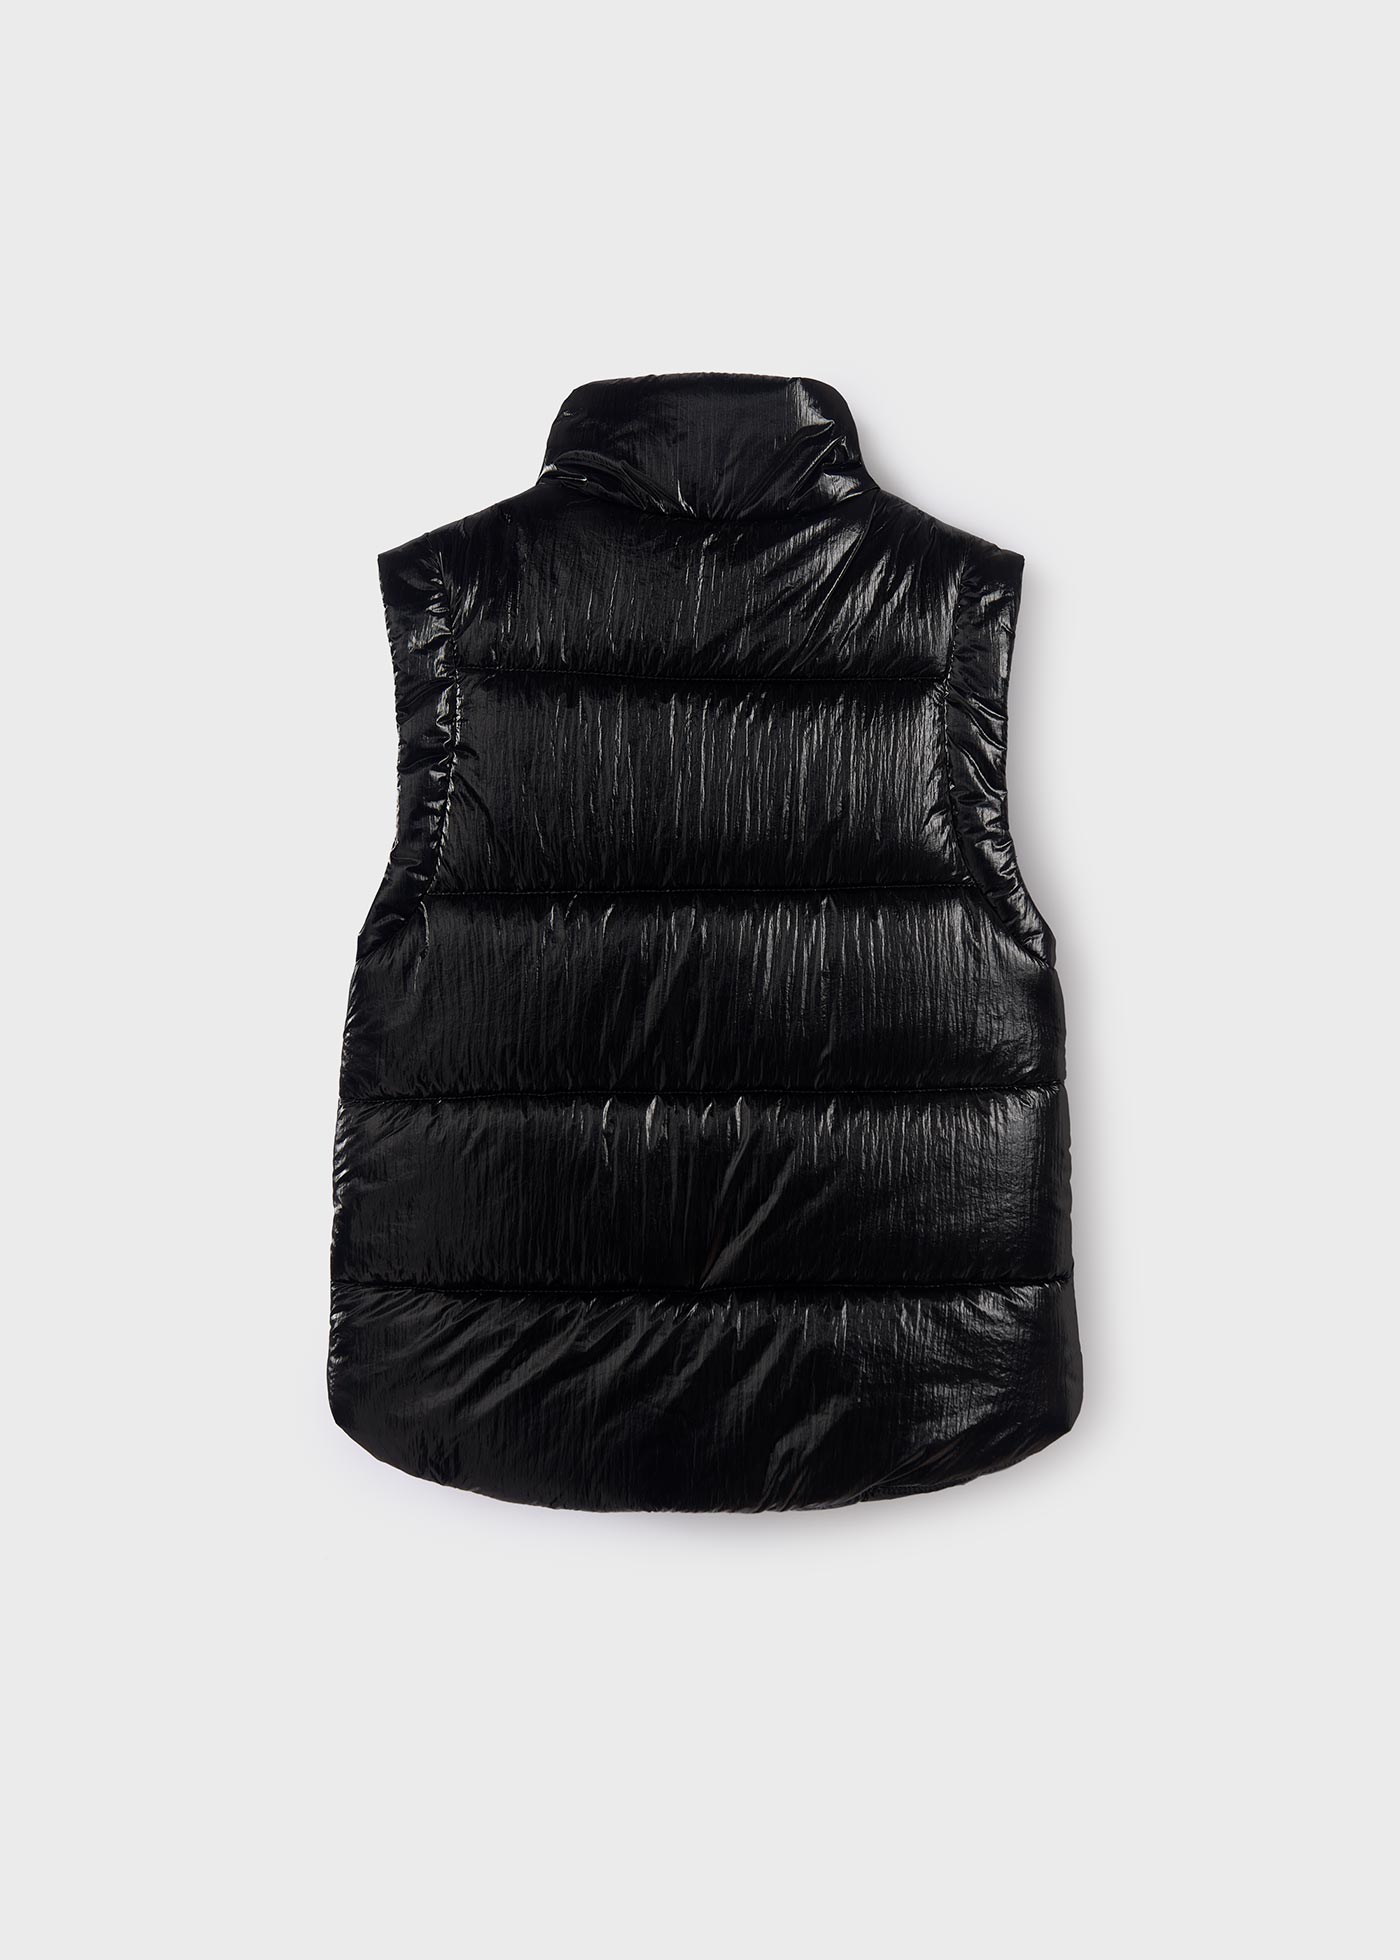 Metallic vest recycled fibers girl